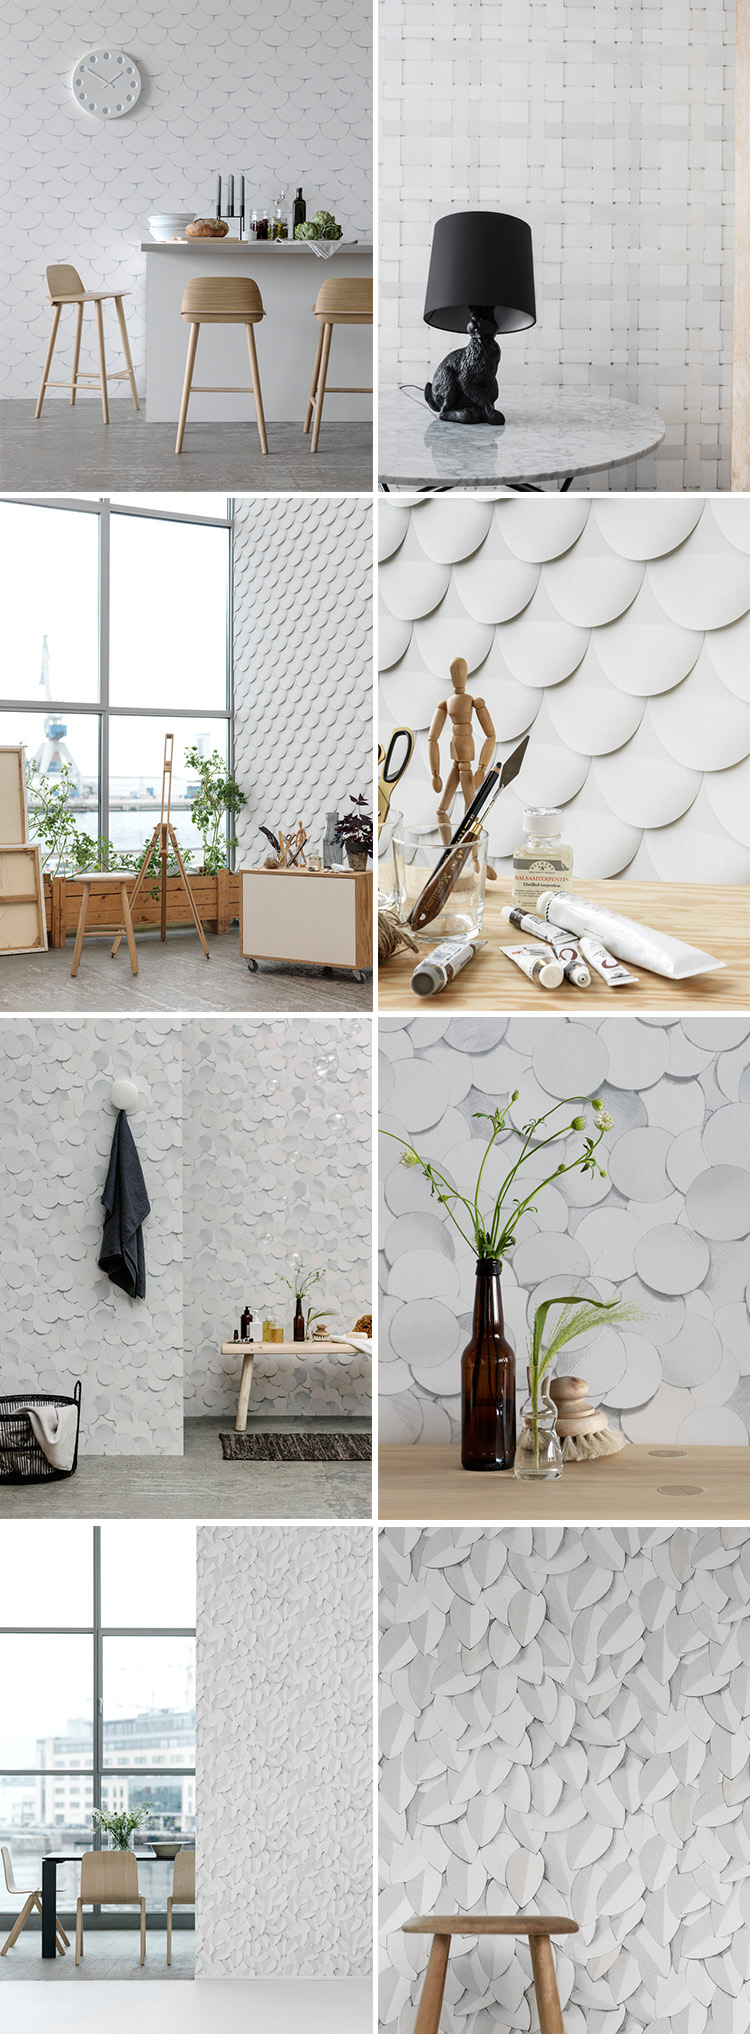 Eco wallpaper - nya tapeter med illusion av struktur